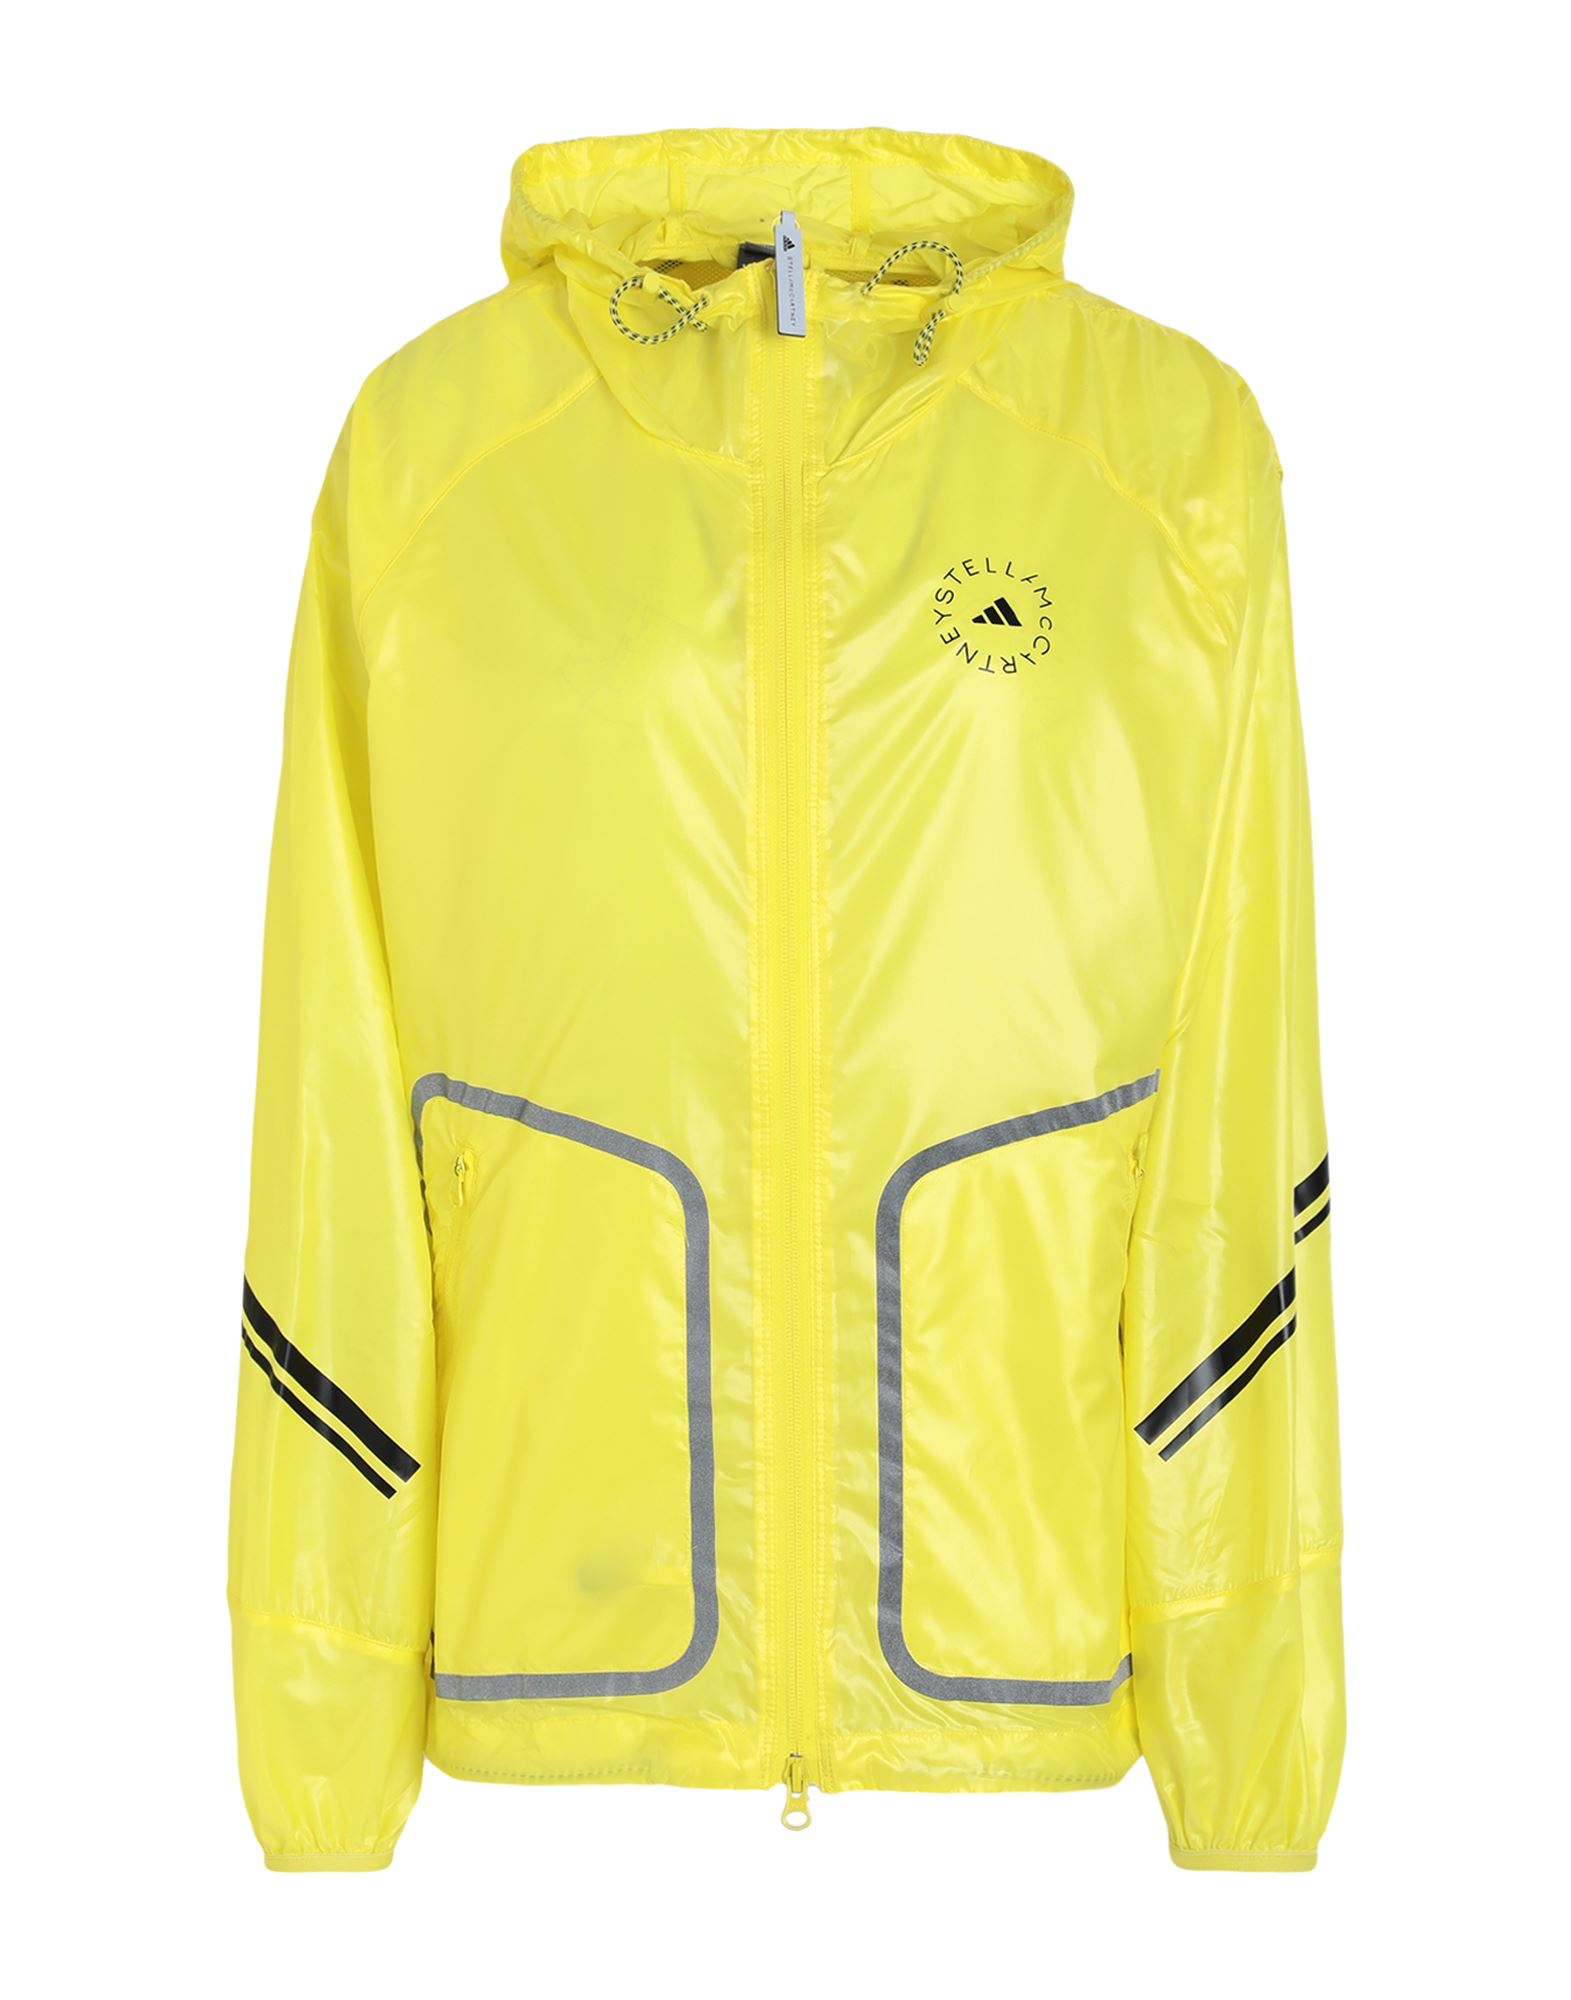 Shop Adidas By Stella Mccartney Truepace Running Jacket Woman Jacket Yellow Si